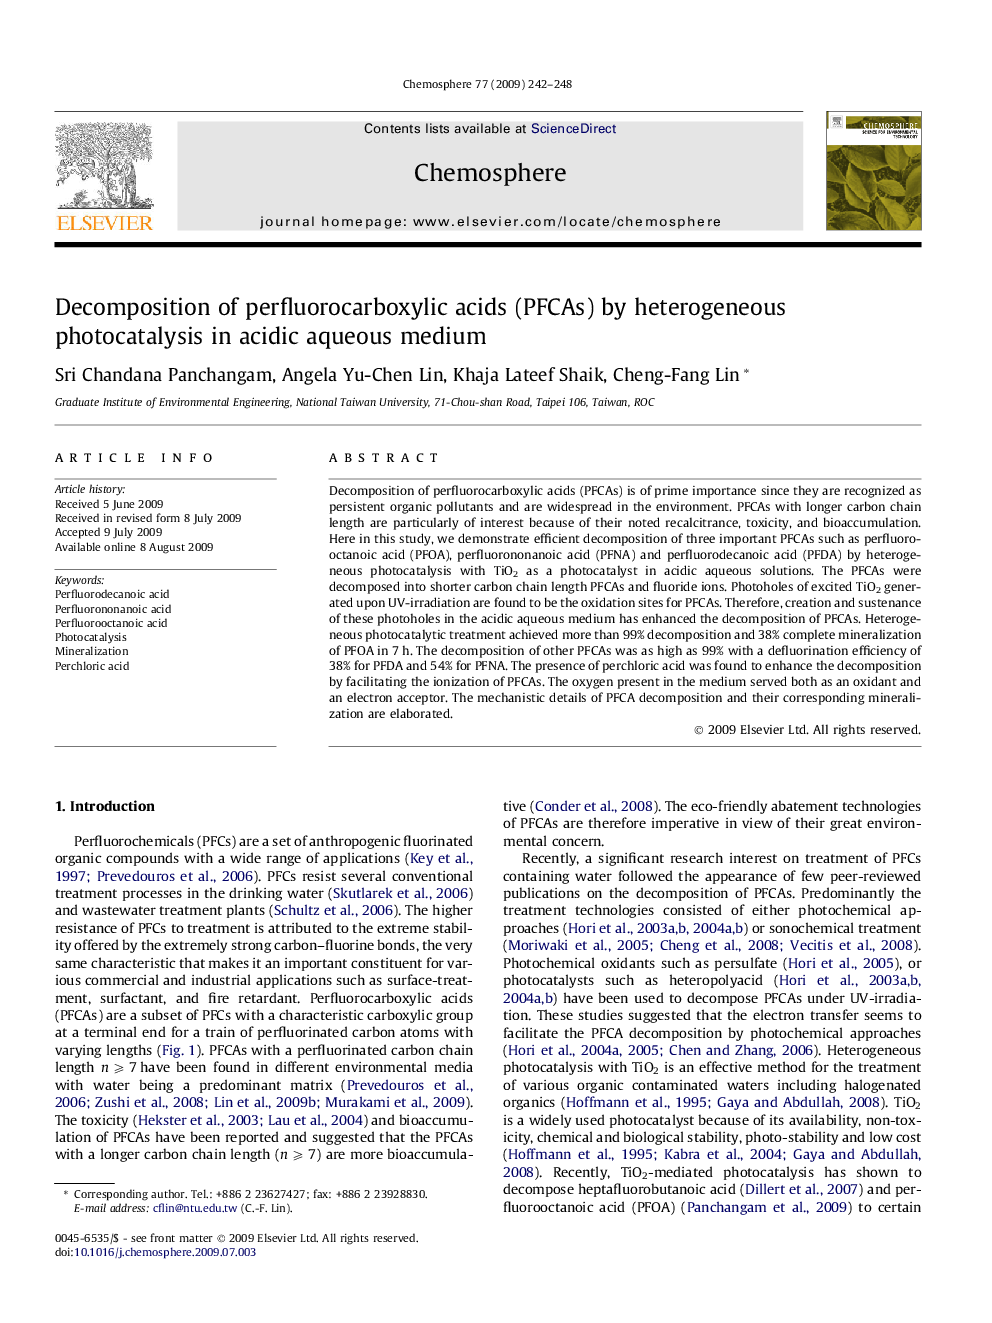 Decomposition of perfluorocarboxylic acids (PFCAs) by heterogeneous photocatalysis in acidic aqueous medium